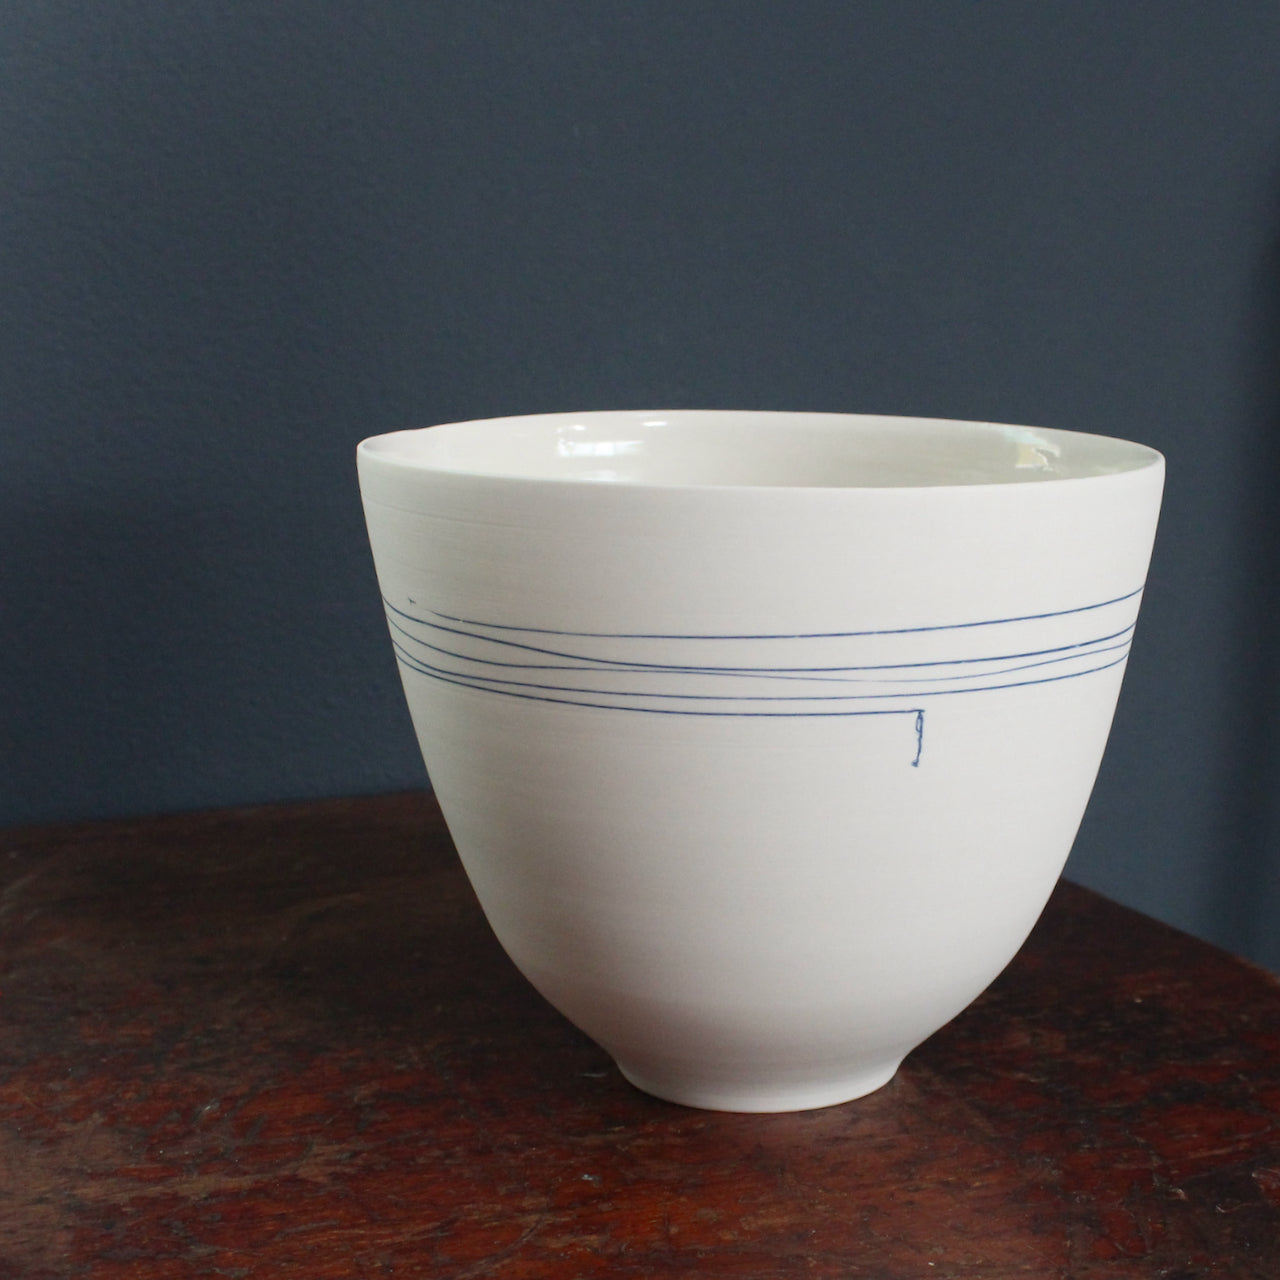 Liz O'Dwyer - Medium Porcelain horizontal